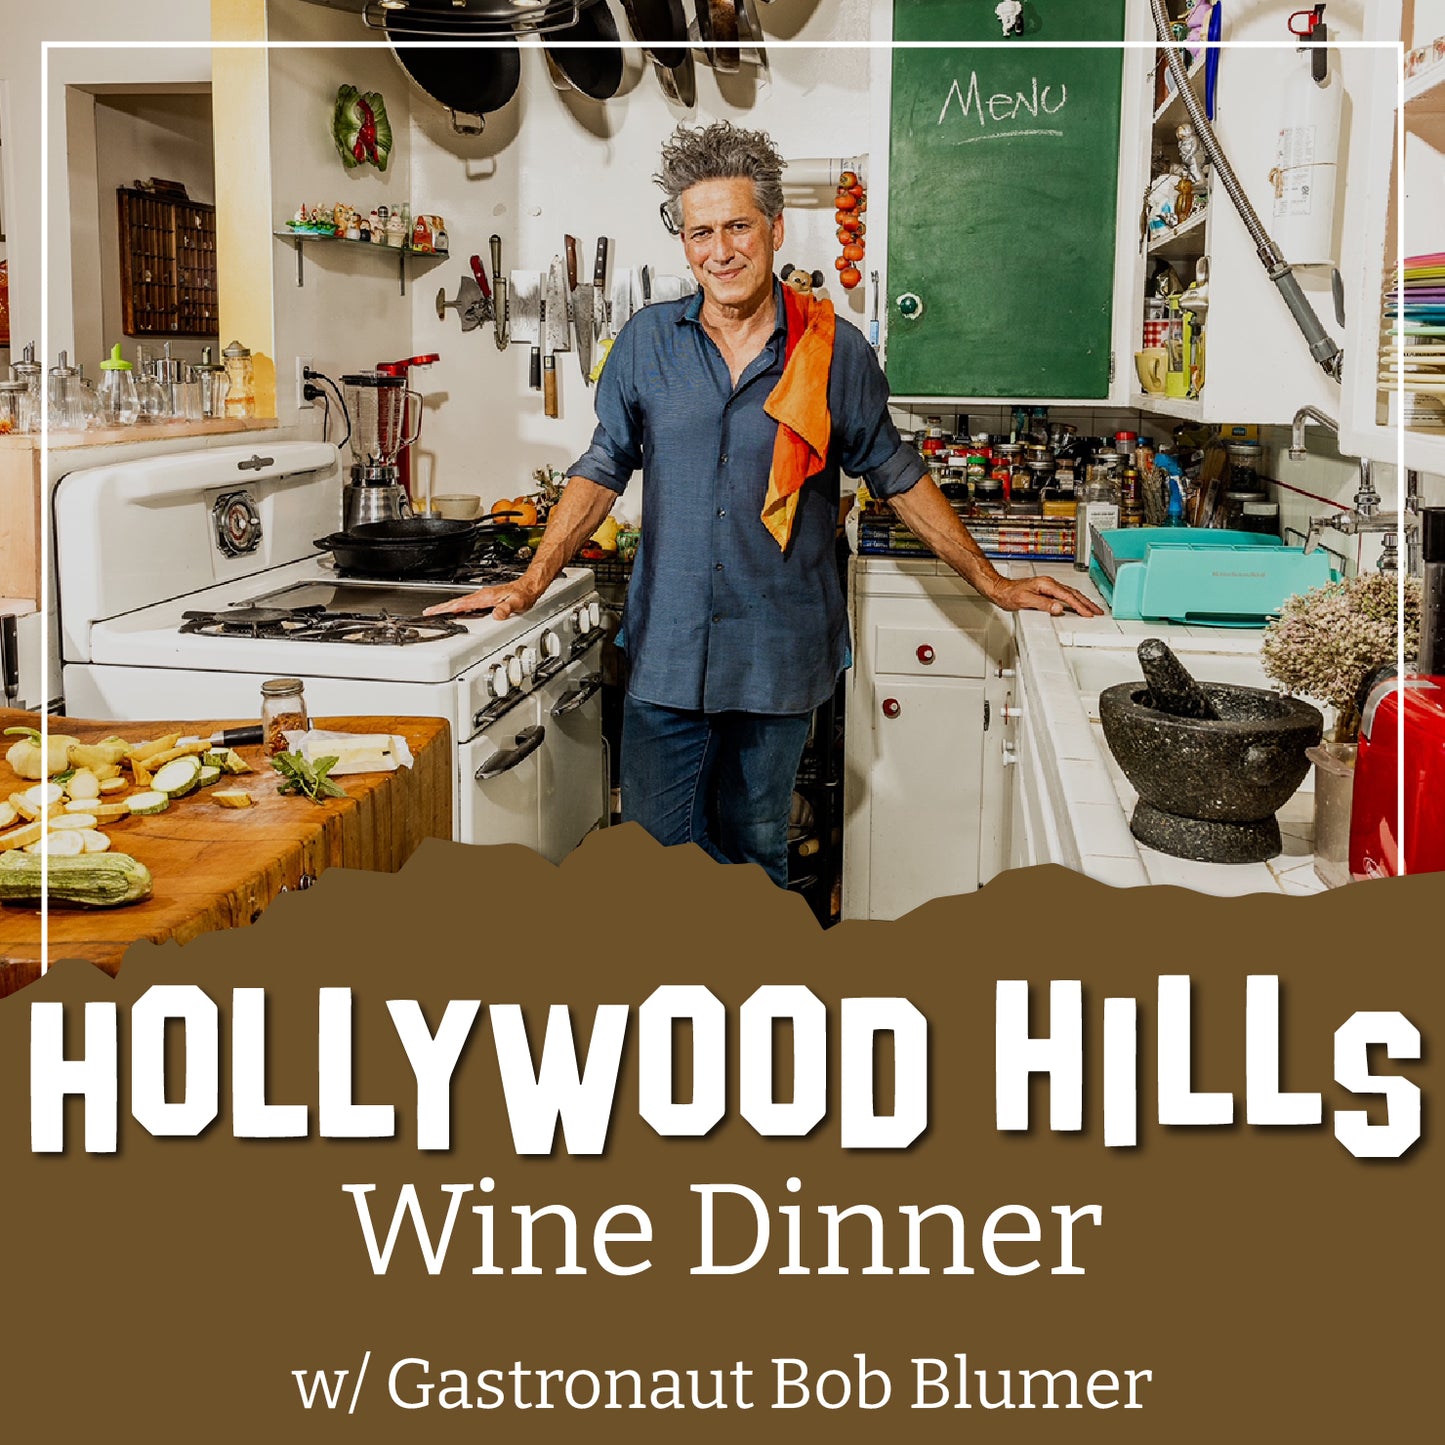 Hollywood Hills Wine Dinner w/ Gastronaut Bob Blumer